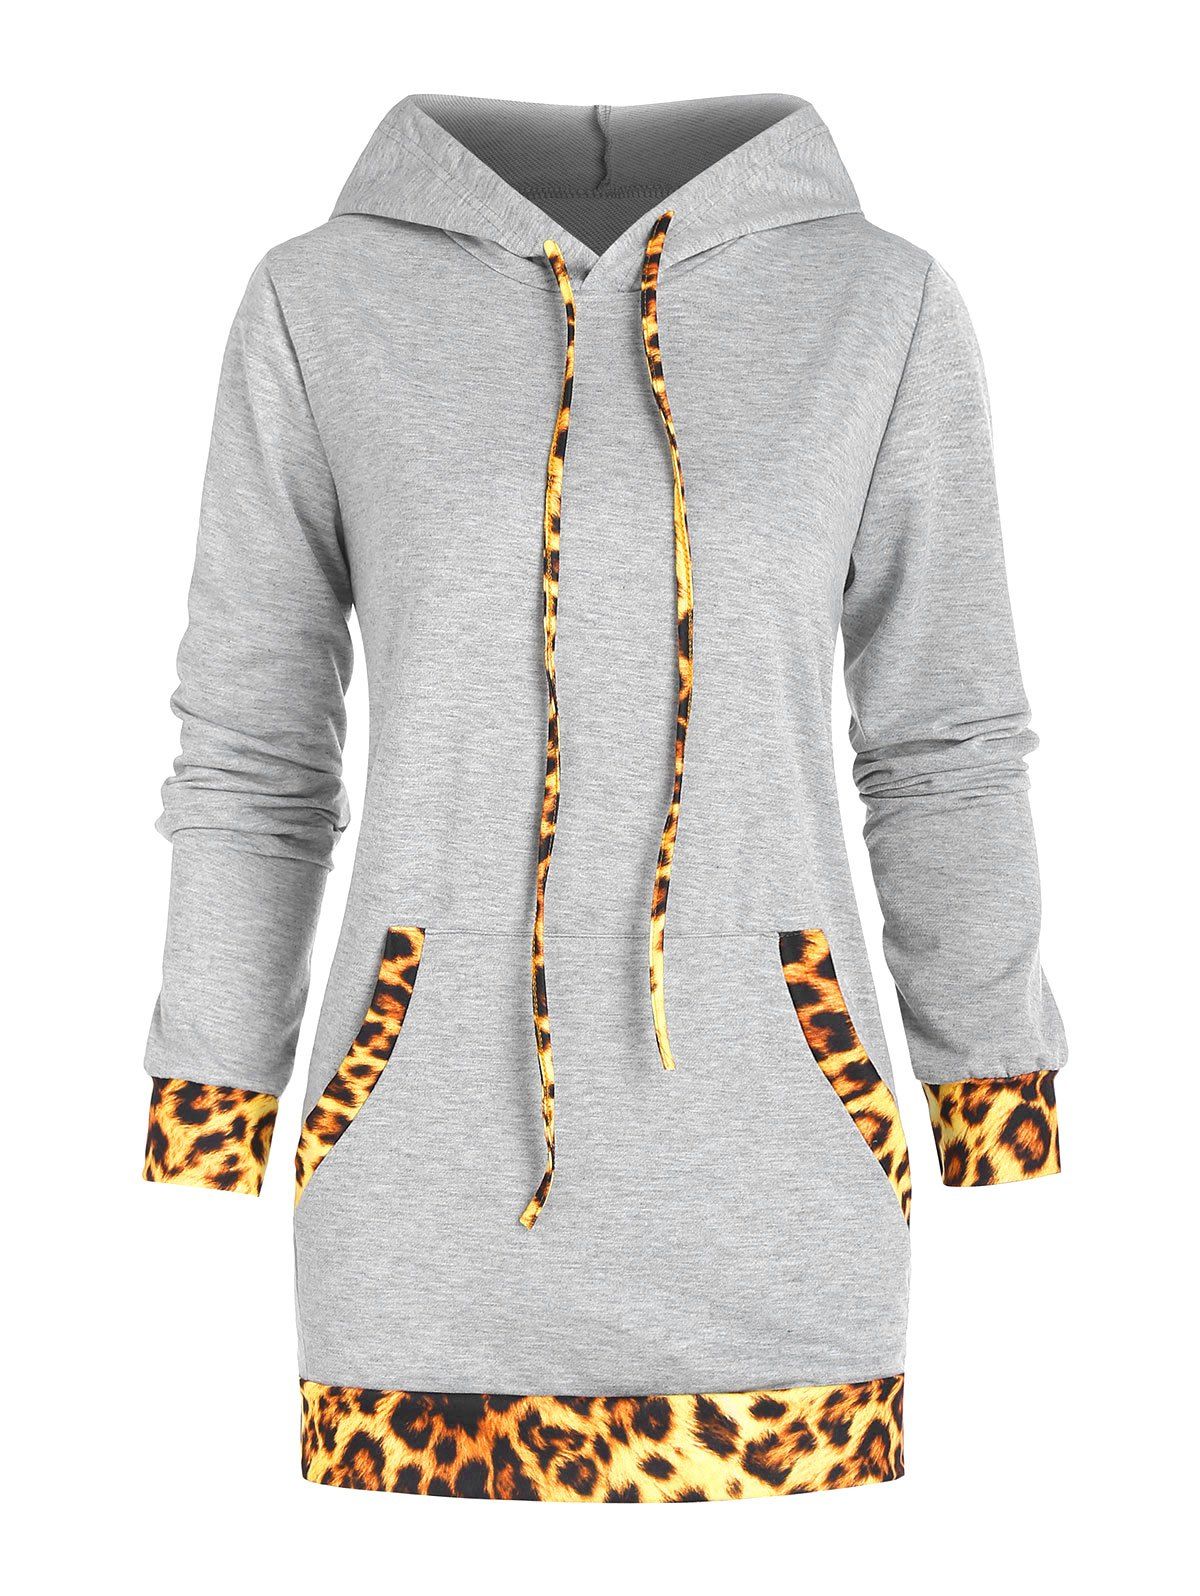 Leopard Kangaroo Pocket Hoodie Dress - LIGHT GRAY XXL